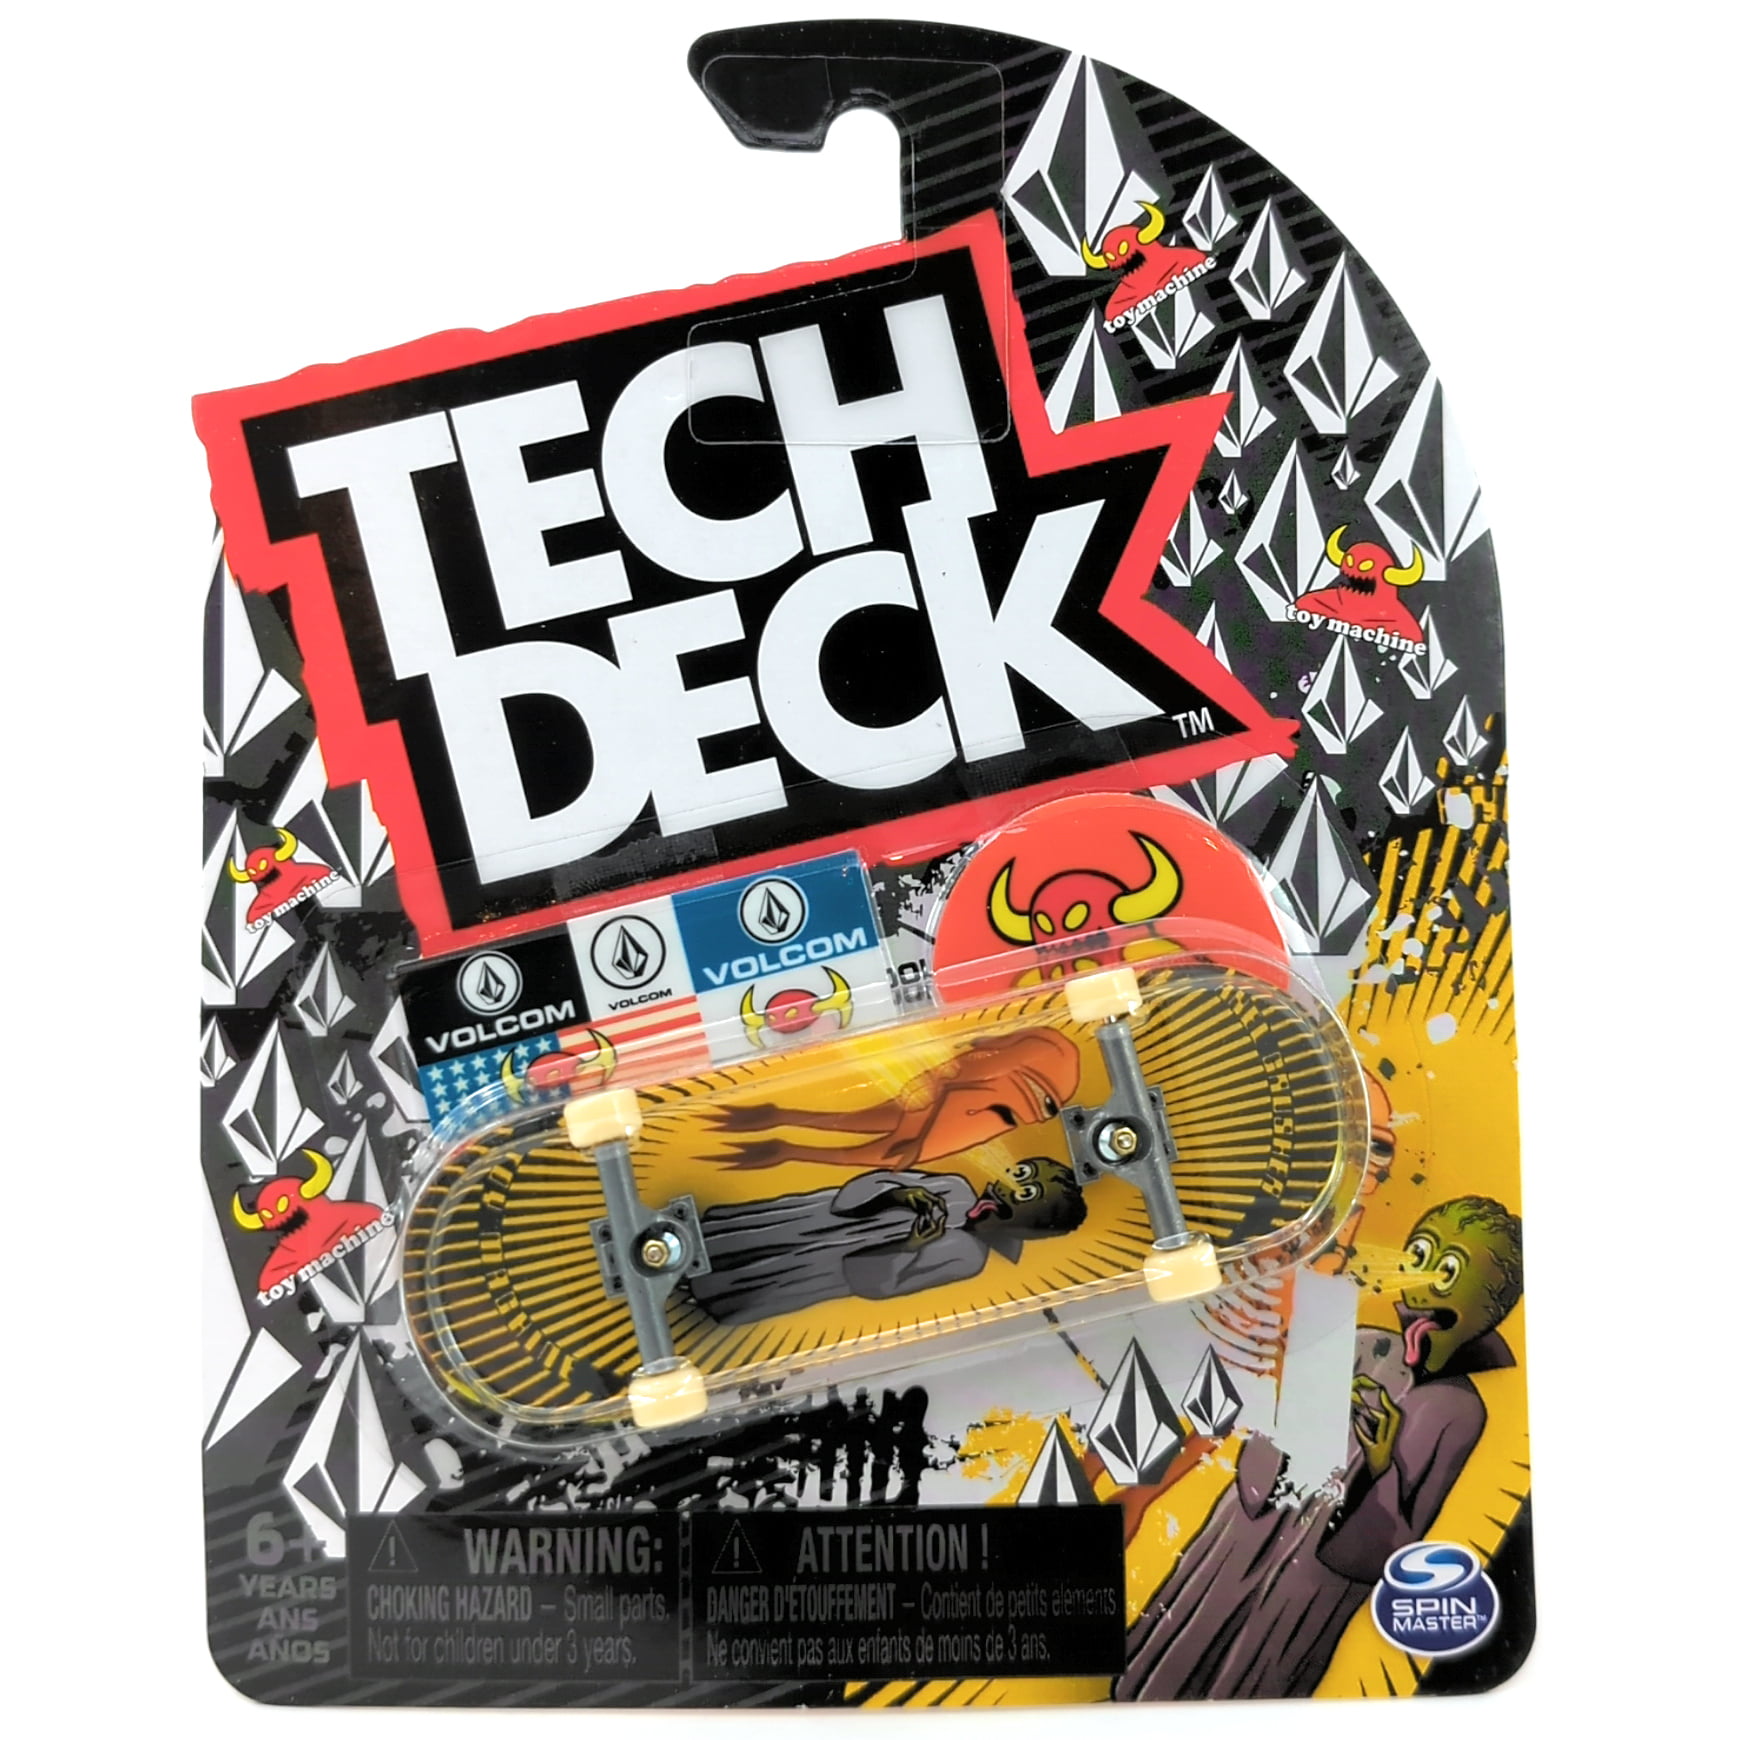 Tech Deck PRIMITIVE RARE Skate finger Paul Rodriguez Tiger World Edition 